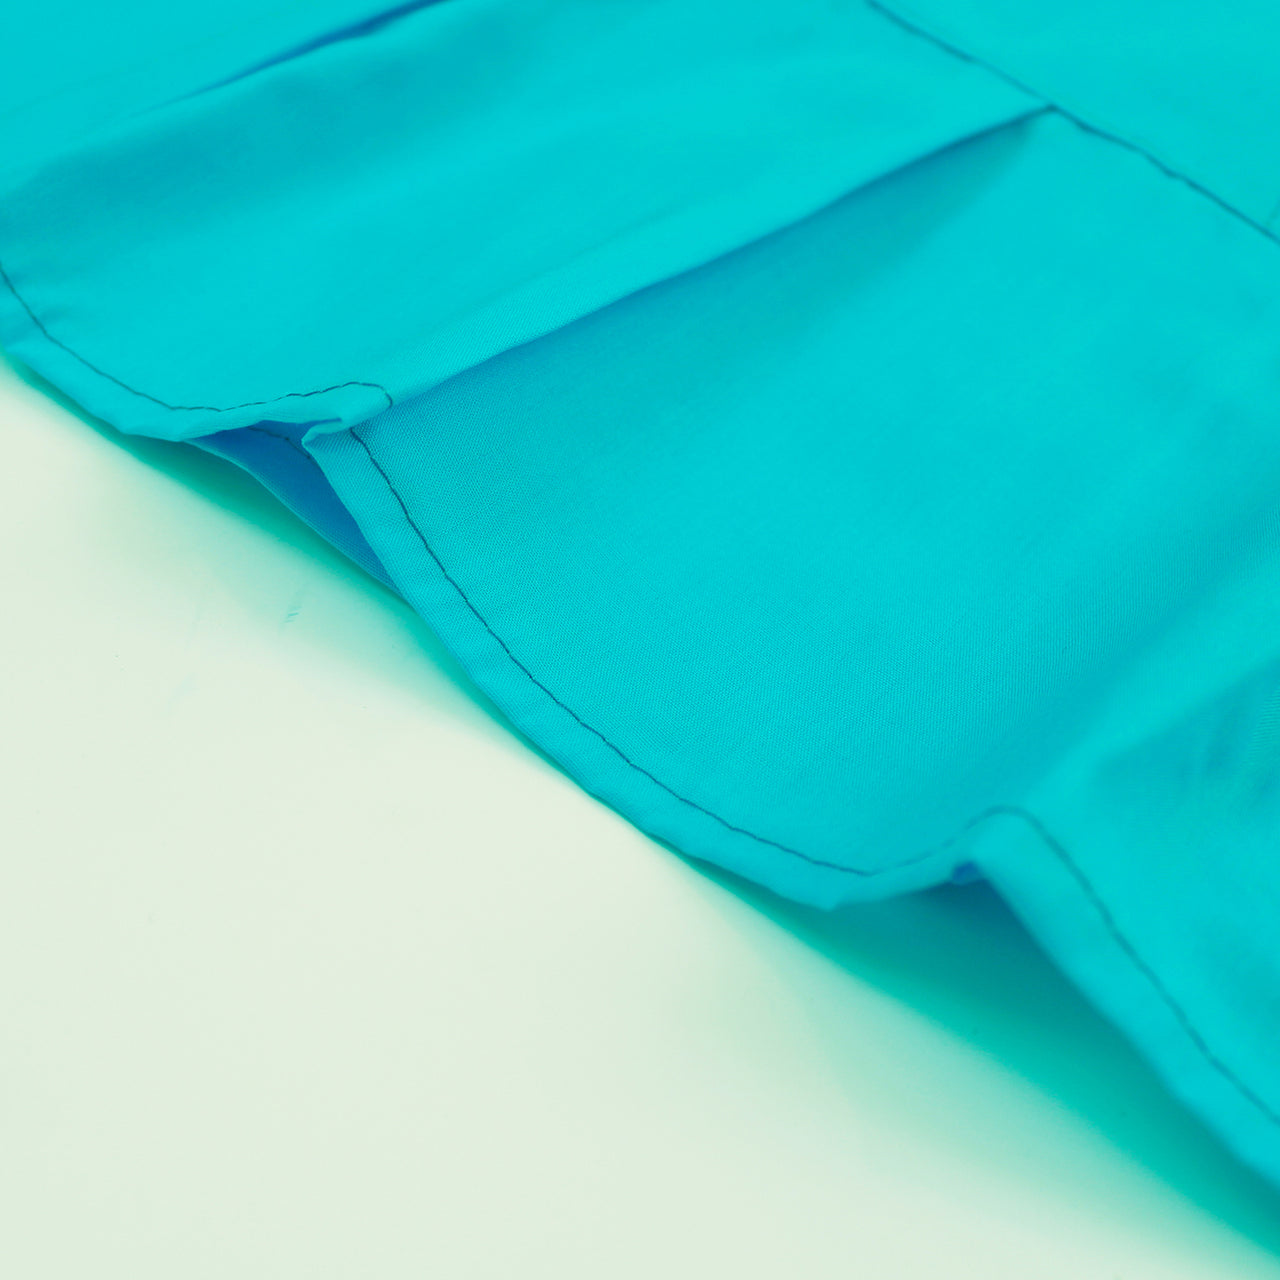 Turquoise - Sari (Saree) Petticoat - Available in S, M, L & XL - Underskirts For Sari's